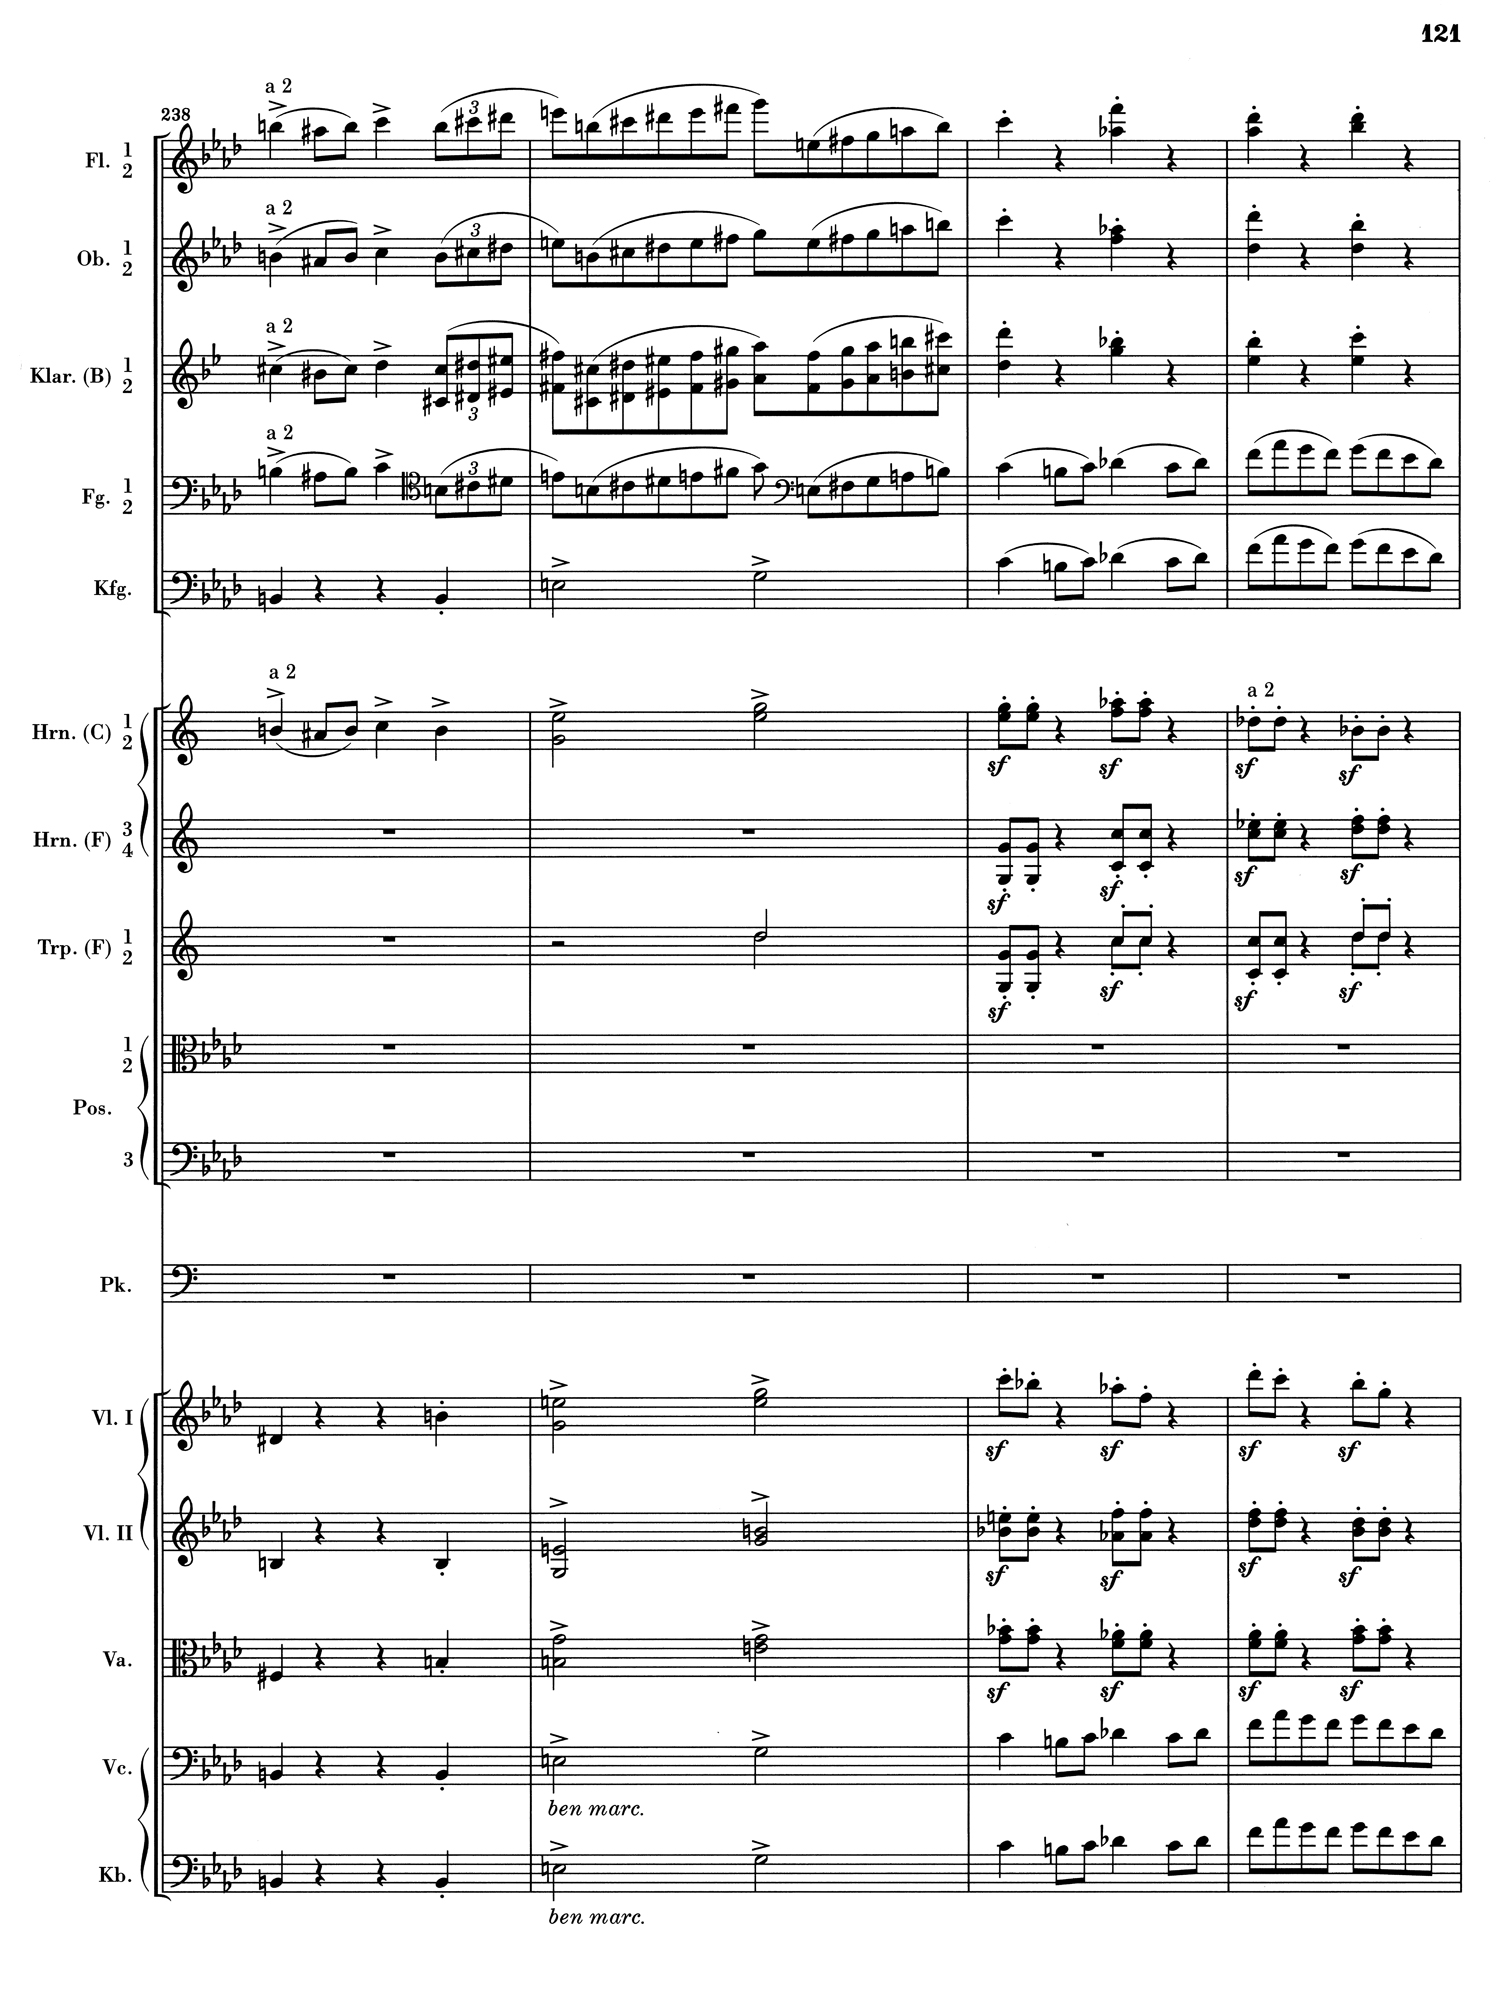 Brahms 3 Score 14.jpg